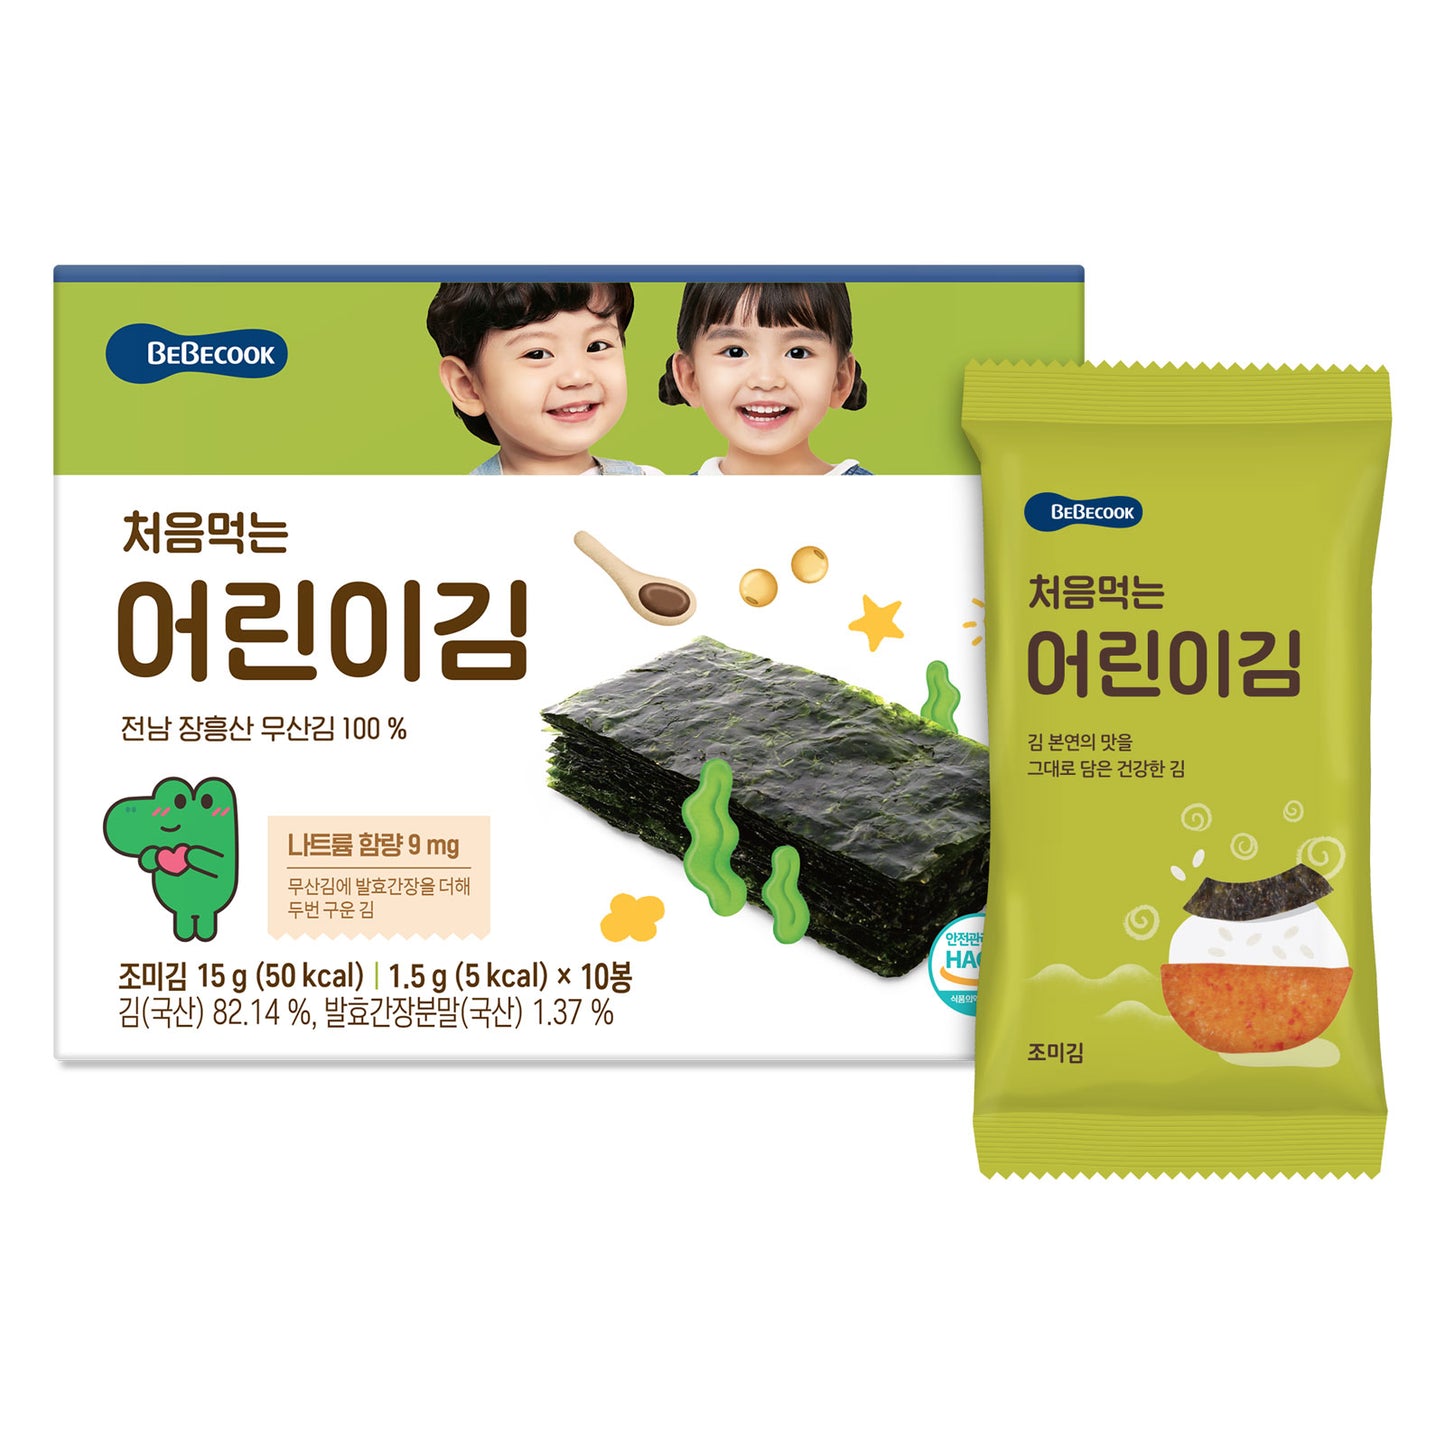 BeBecook - 12-Pk Junior's First Sun-Dried Seaweed (Original) 10 x 1.5g